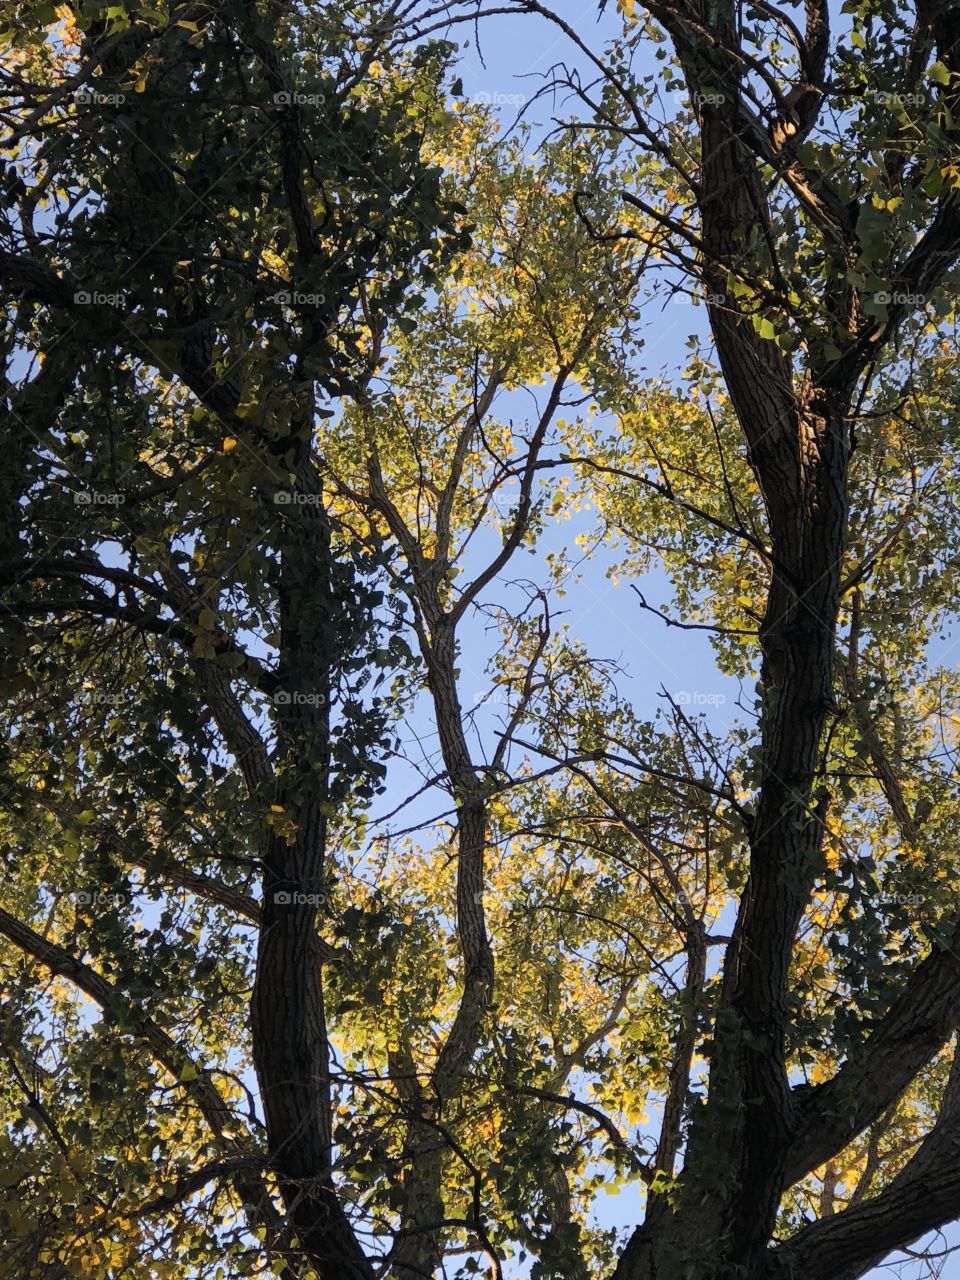 Tree scene